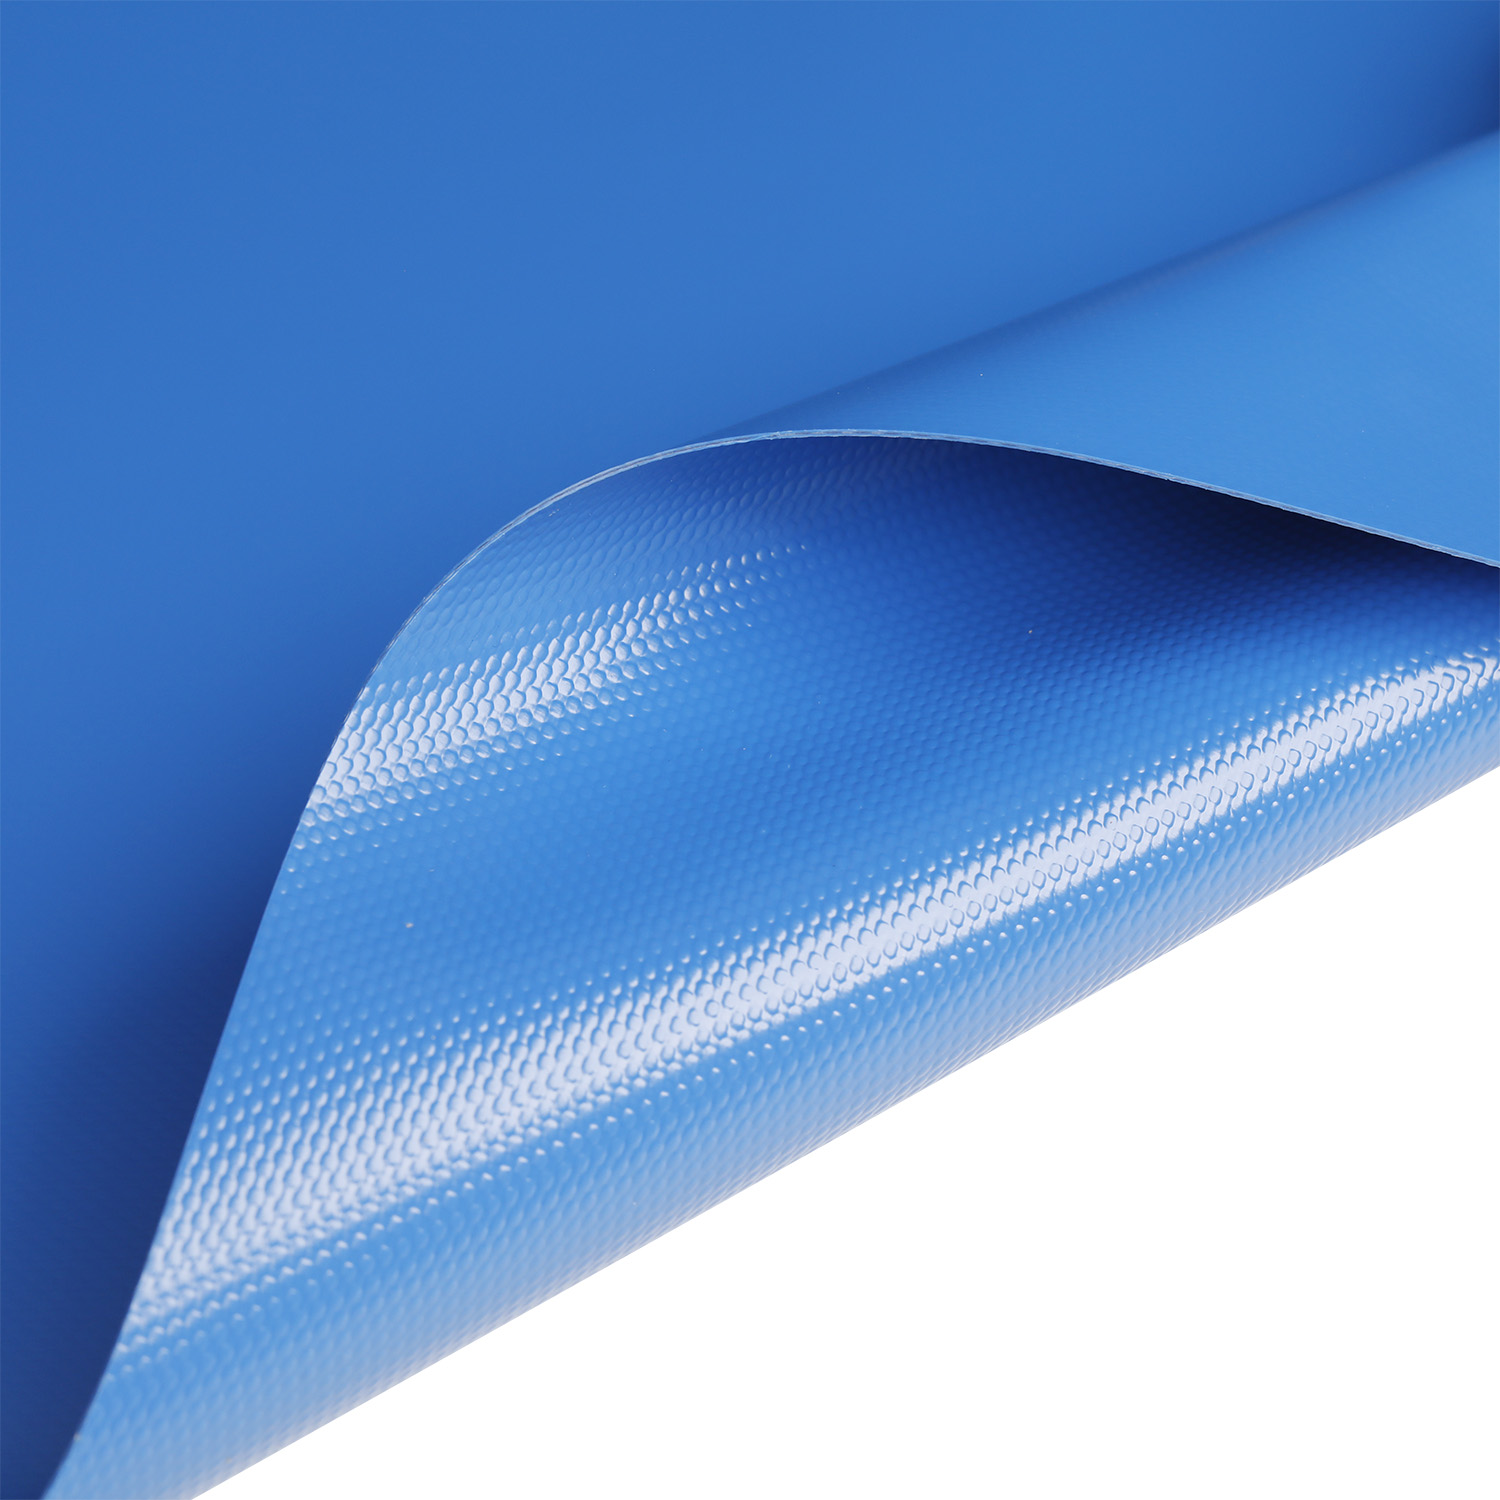 Yatai Textile's Superior PVC Canvas Tarpaulin - 550GSM, UV and Flame Resistant